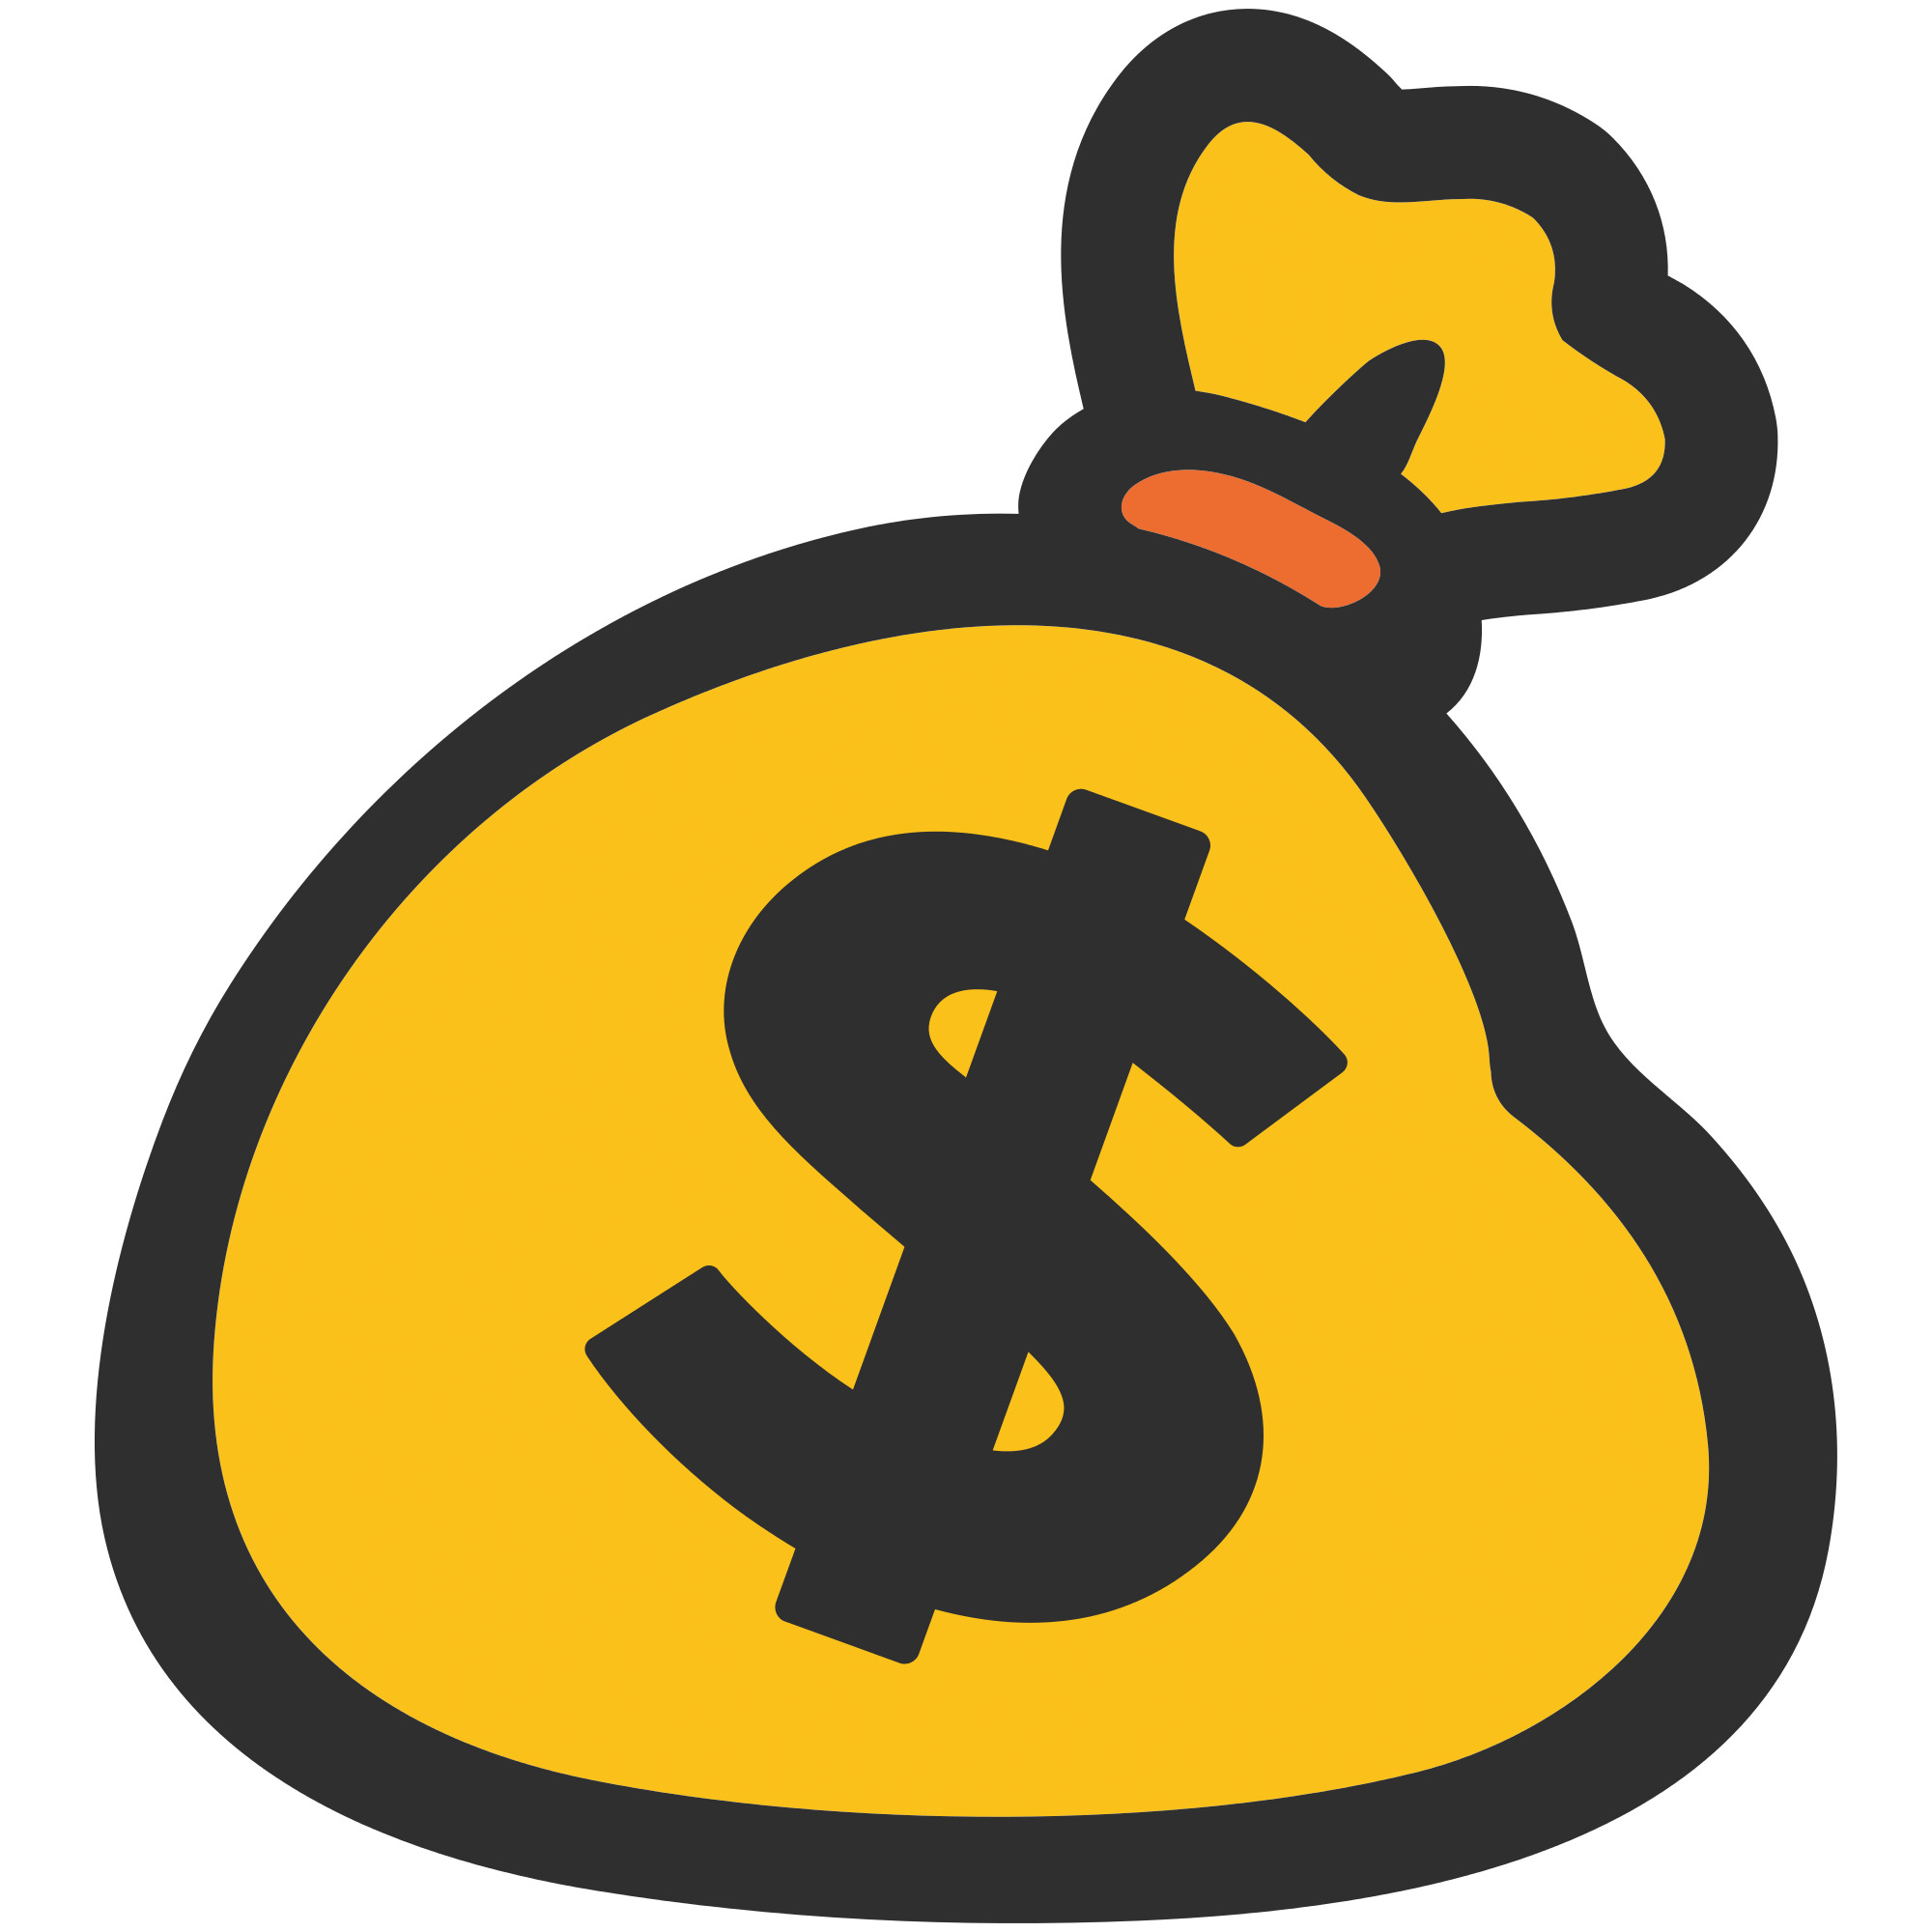 Emoji Bag Of Cash icons